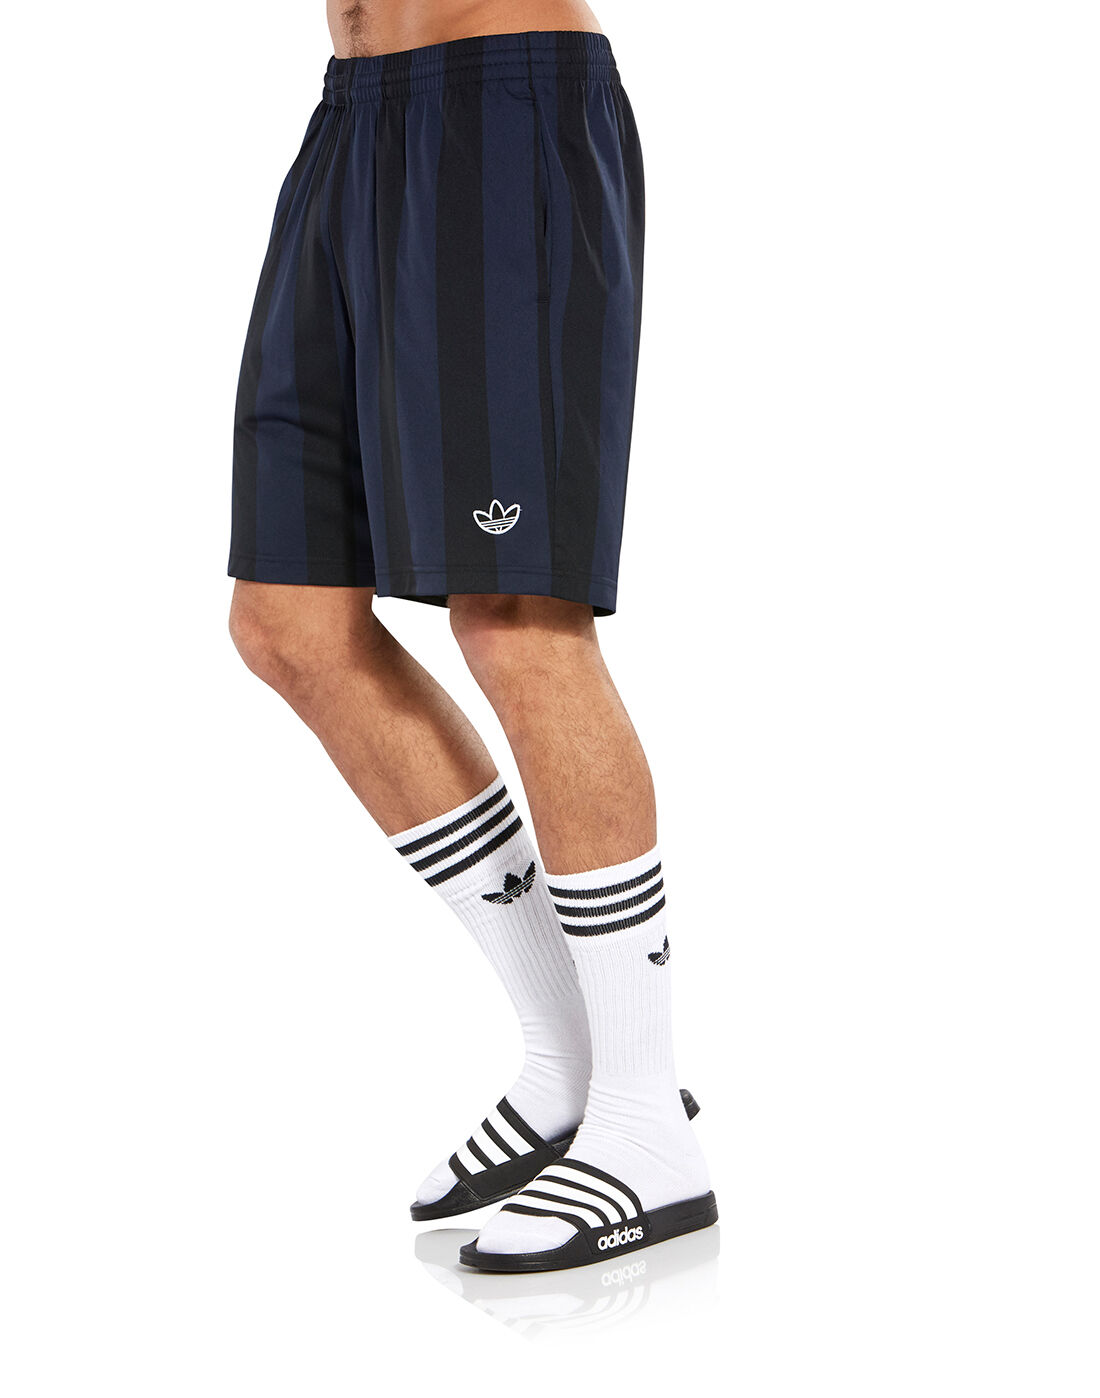 adidas retro football shorts